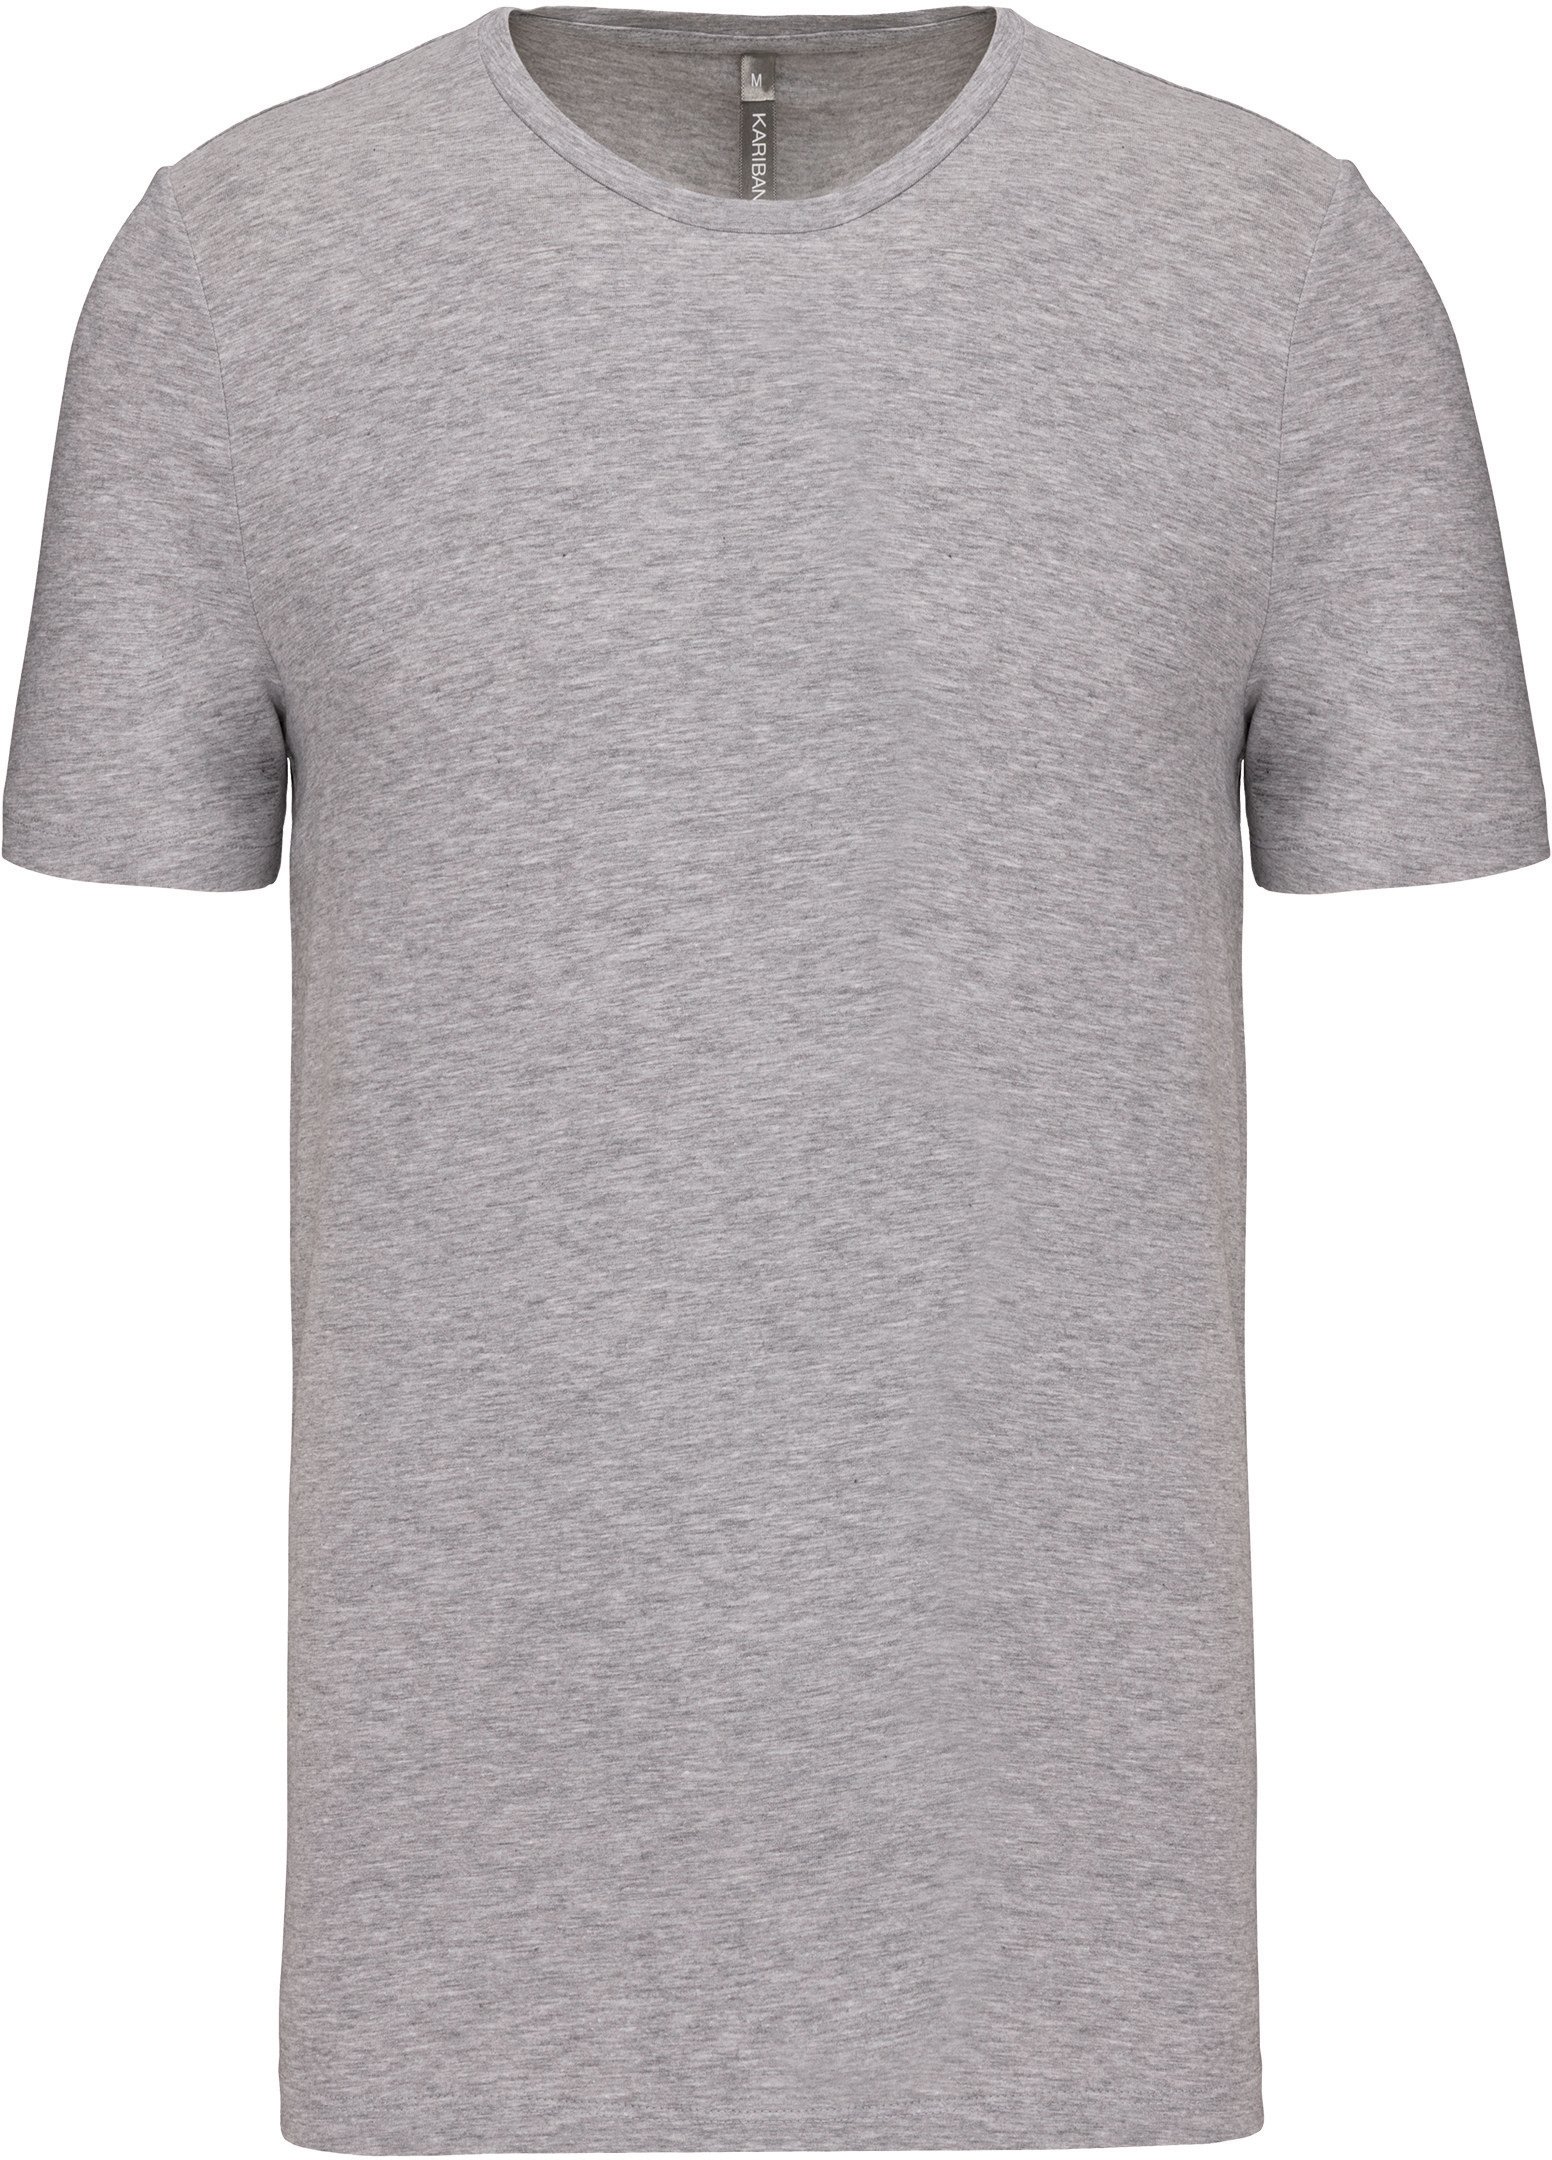 Pánské elastické tričko Barva: Light Grey Heather, Velikost: M